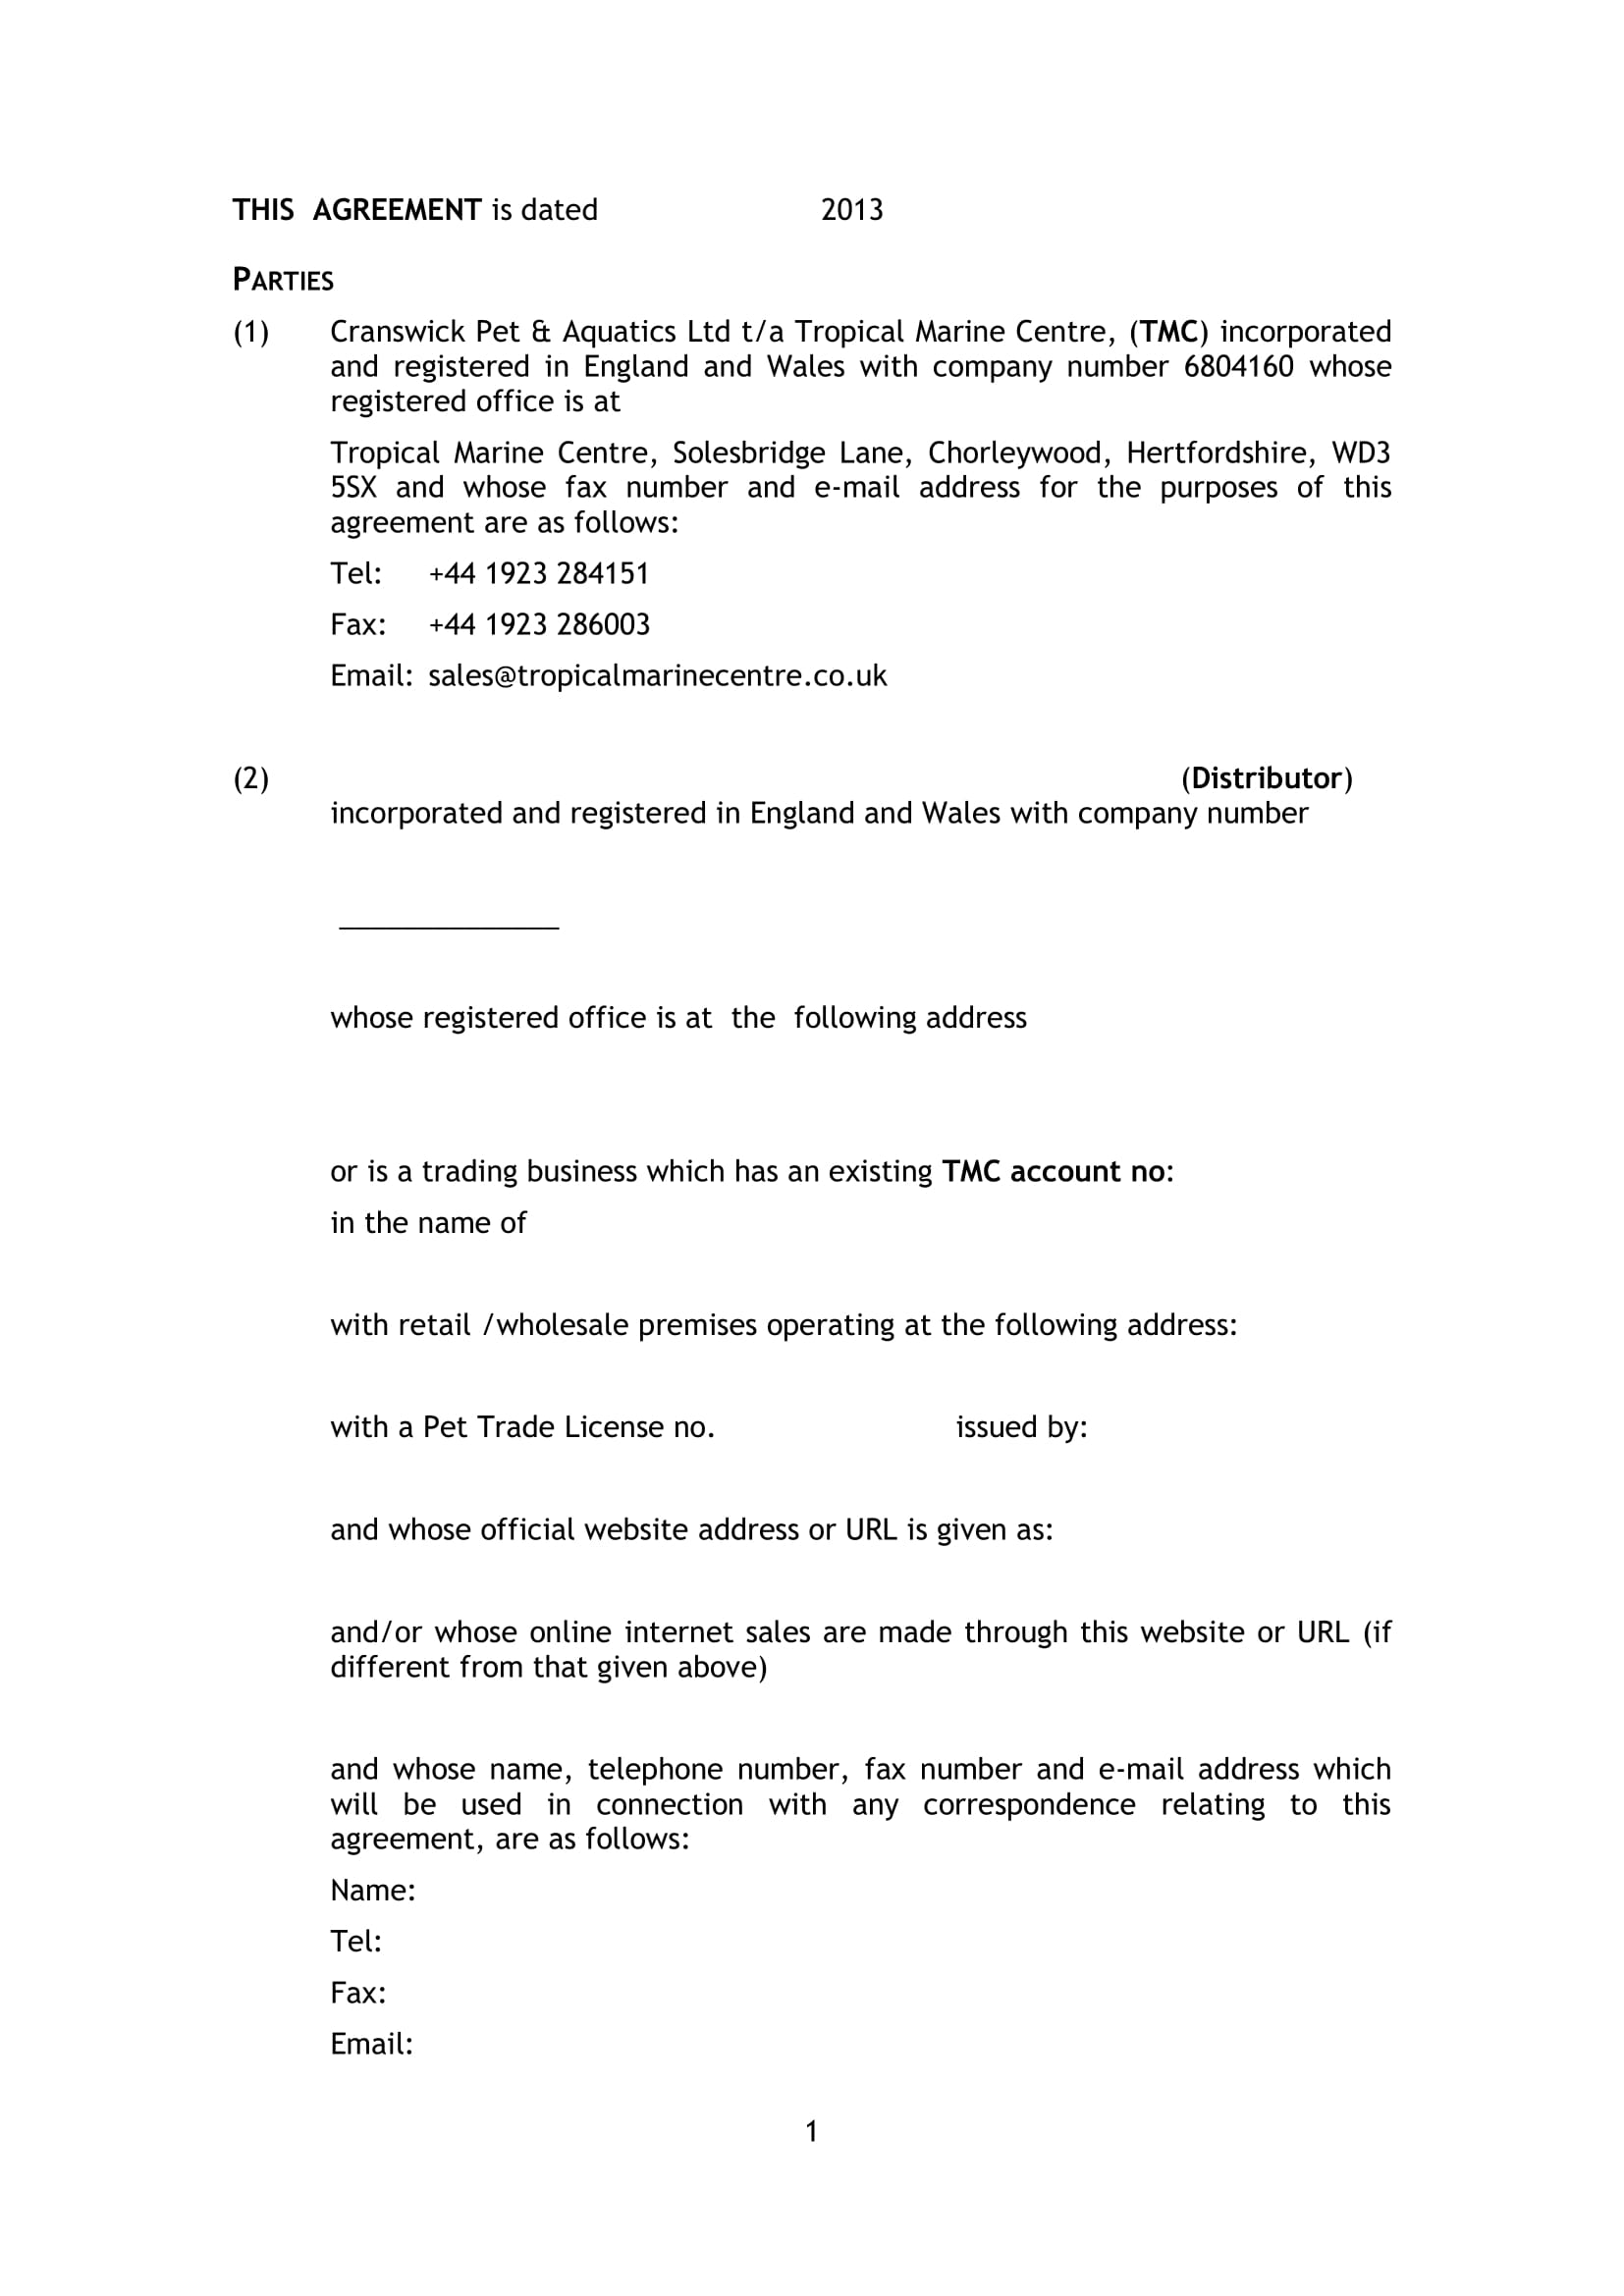 selective distributorship agreement contract form 03